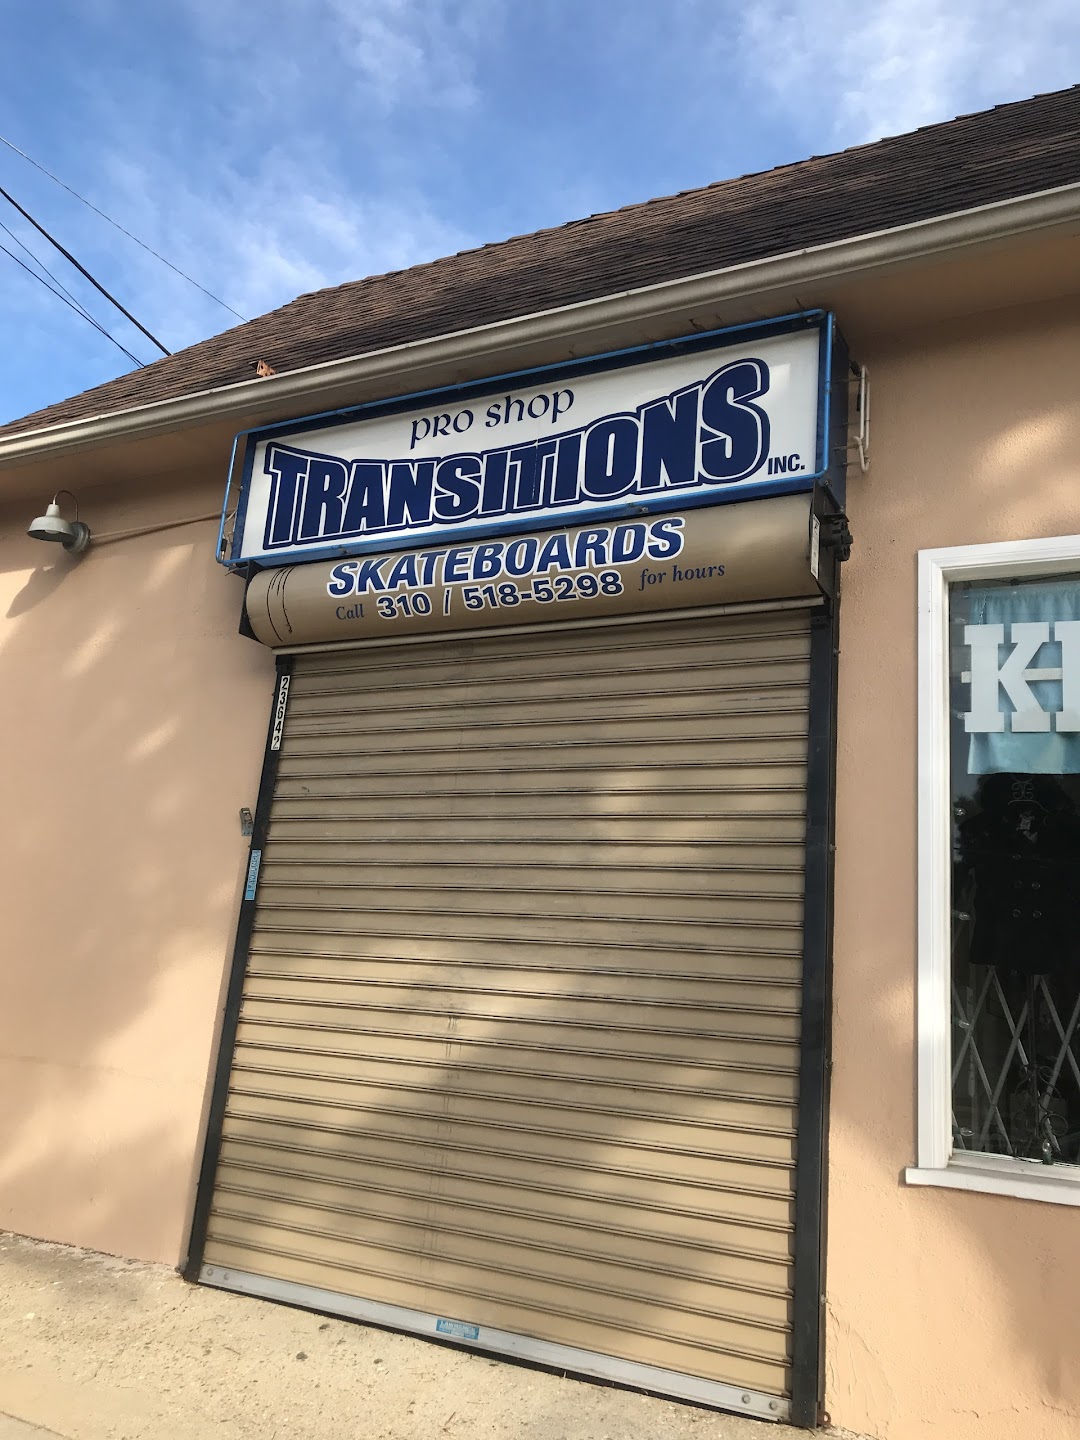 Transitions skate shop